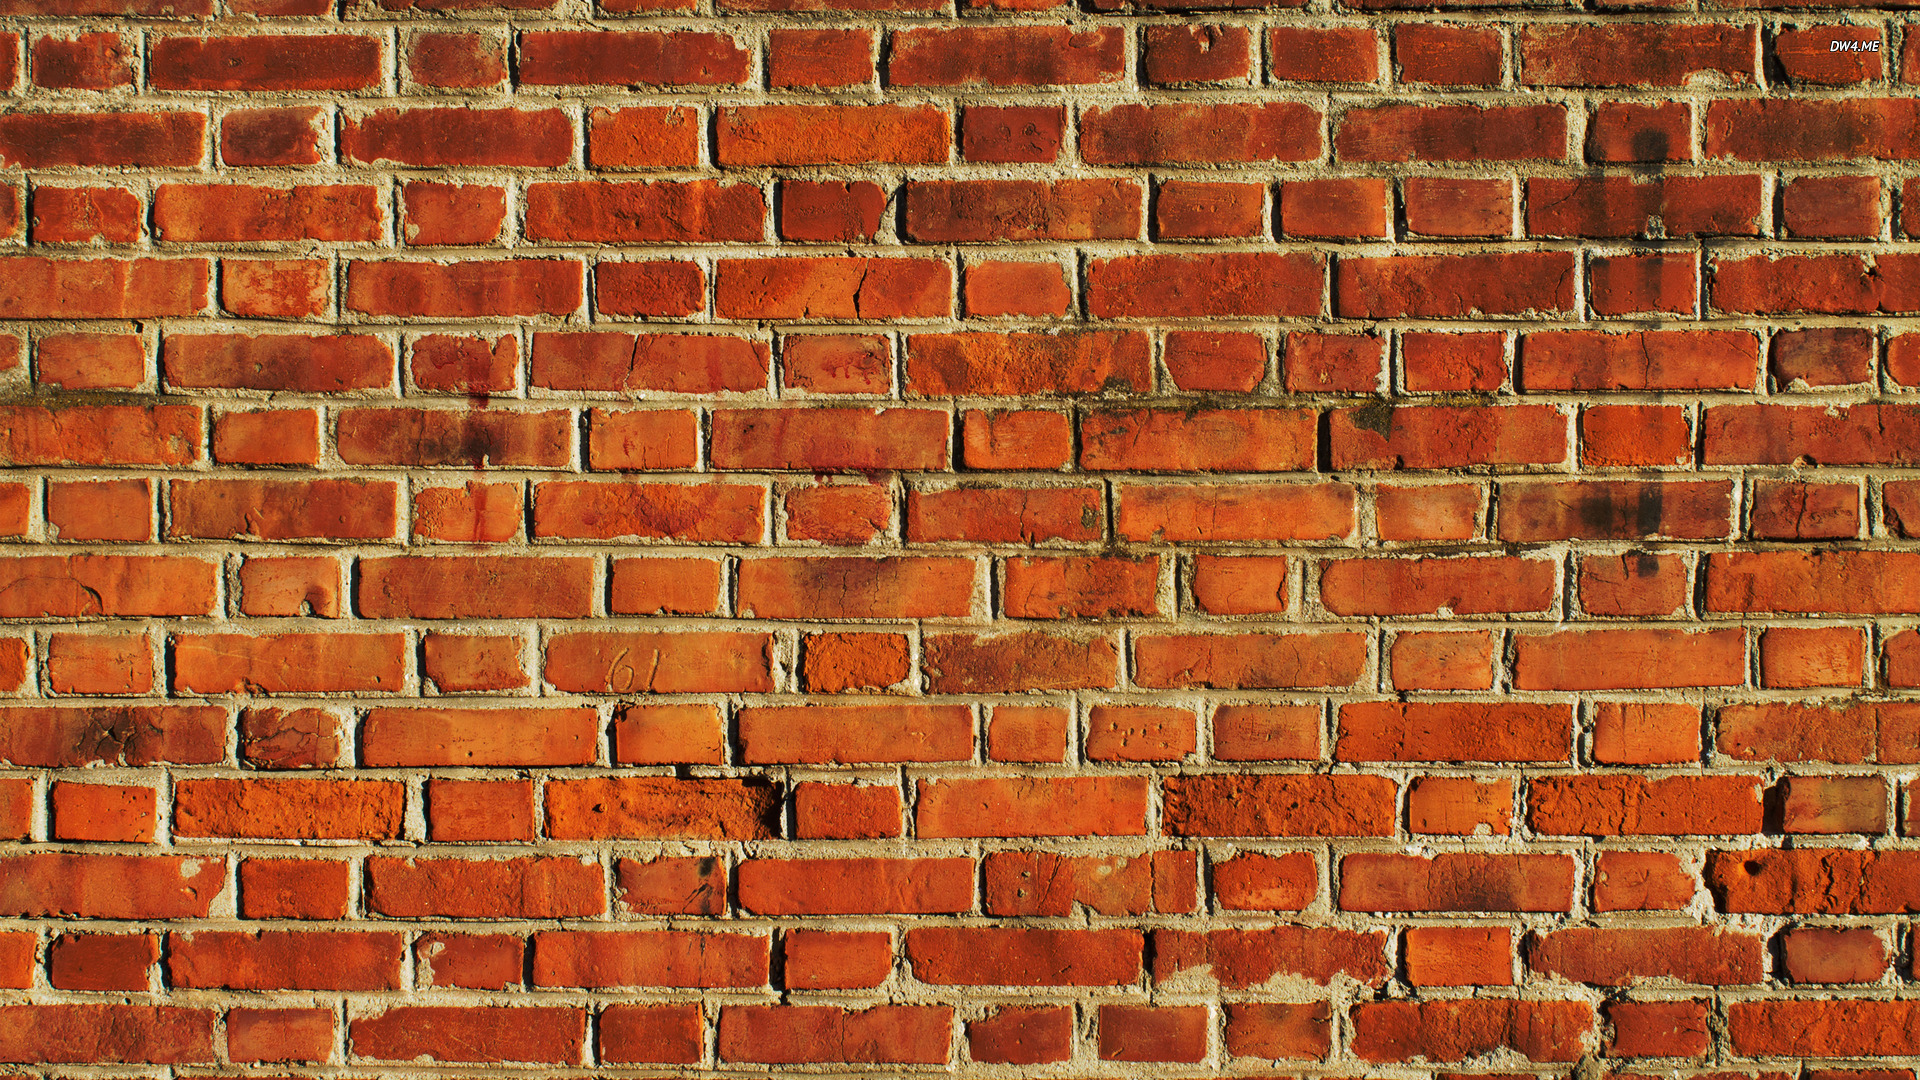 47+] Brick Wall Wallpaper - WallpaperSafari